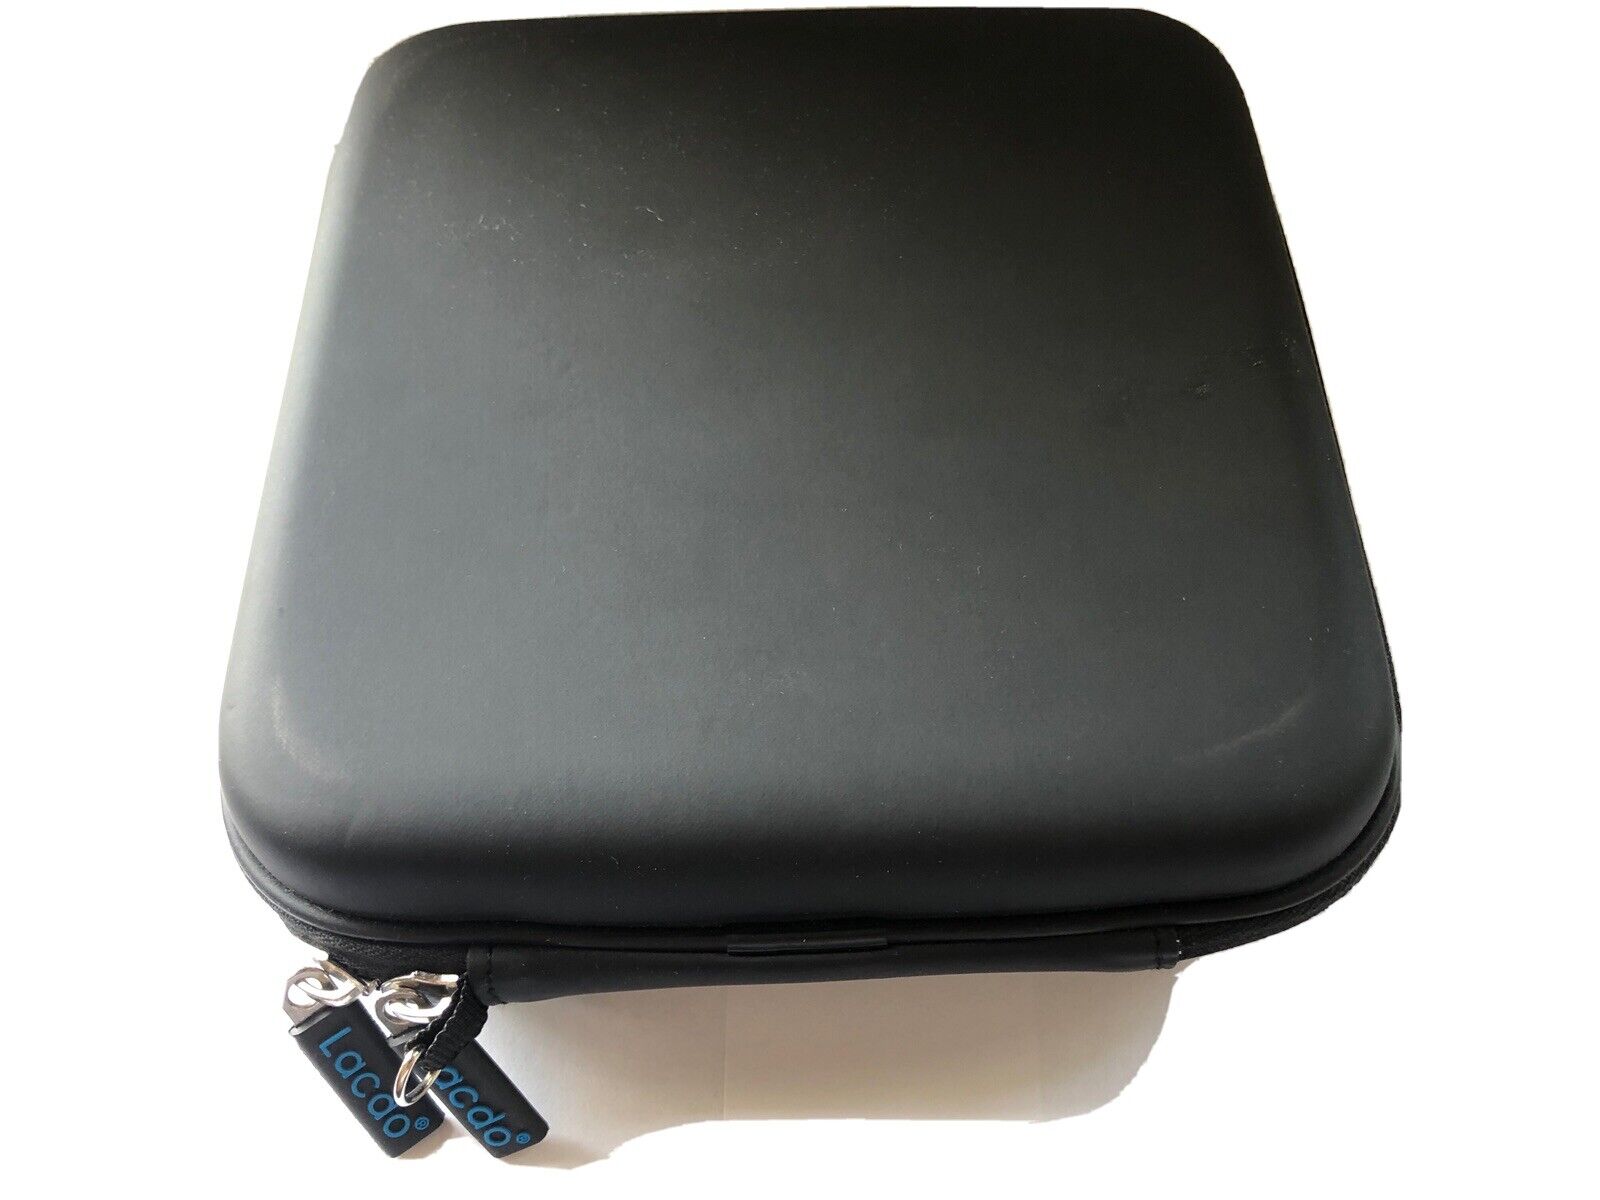 LG GP65NB60 Ultra-Slim Portable External DVD Burner and Drive - Black With Case